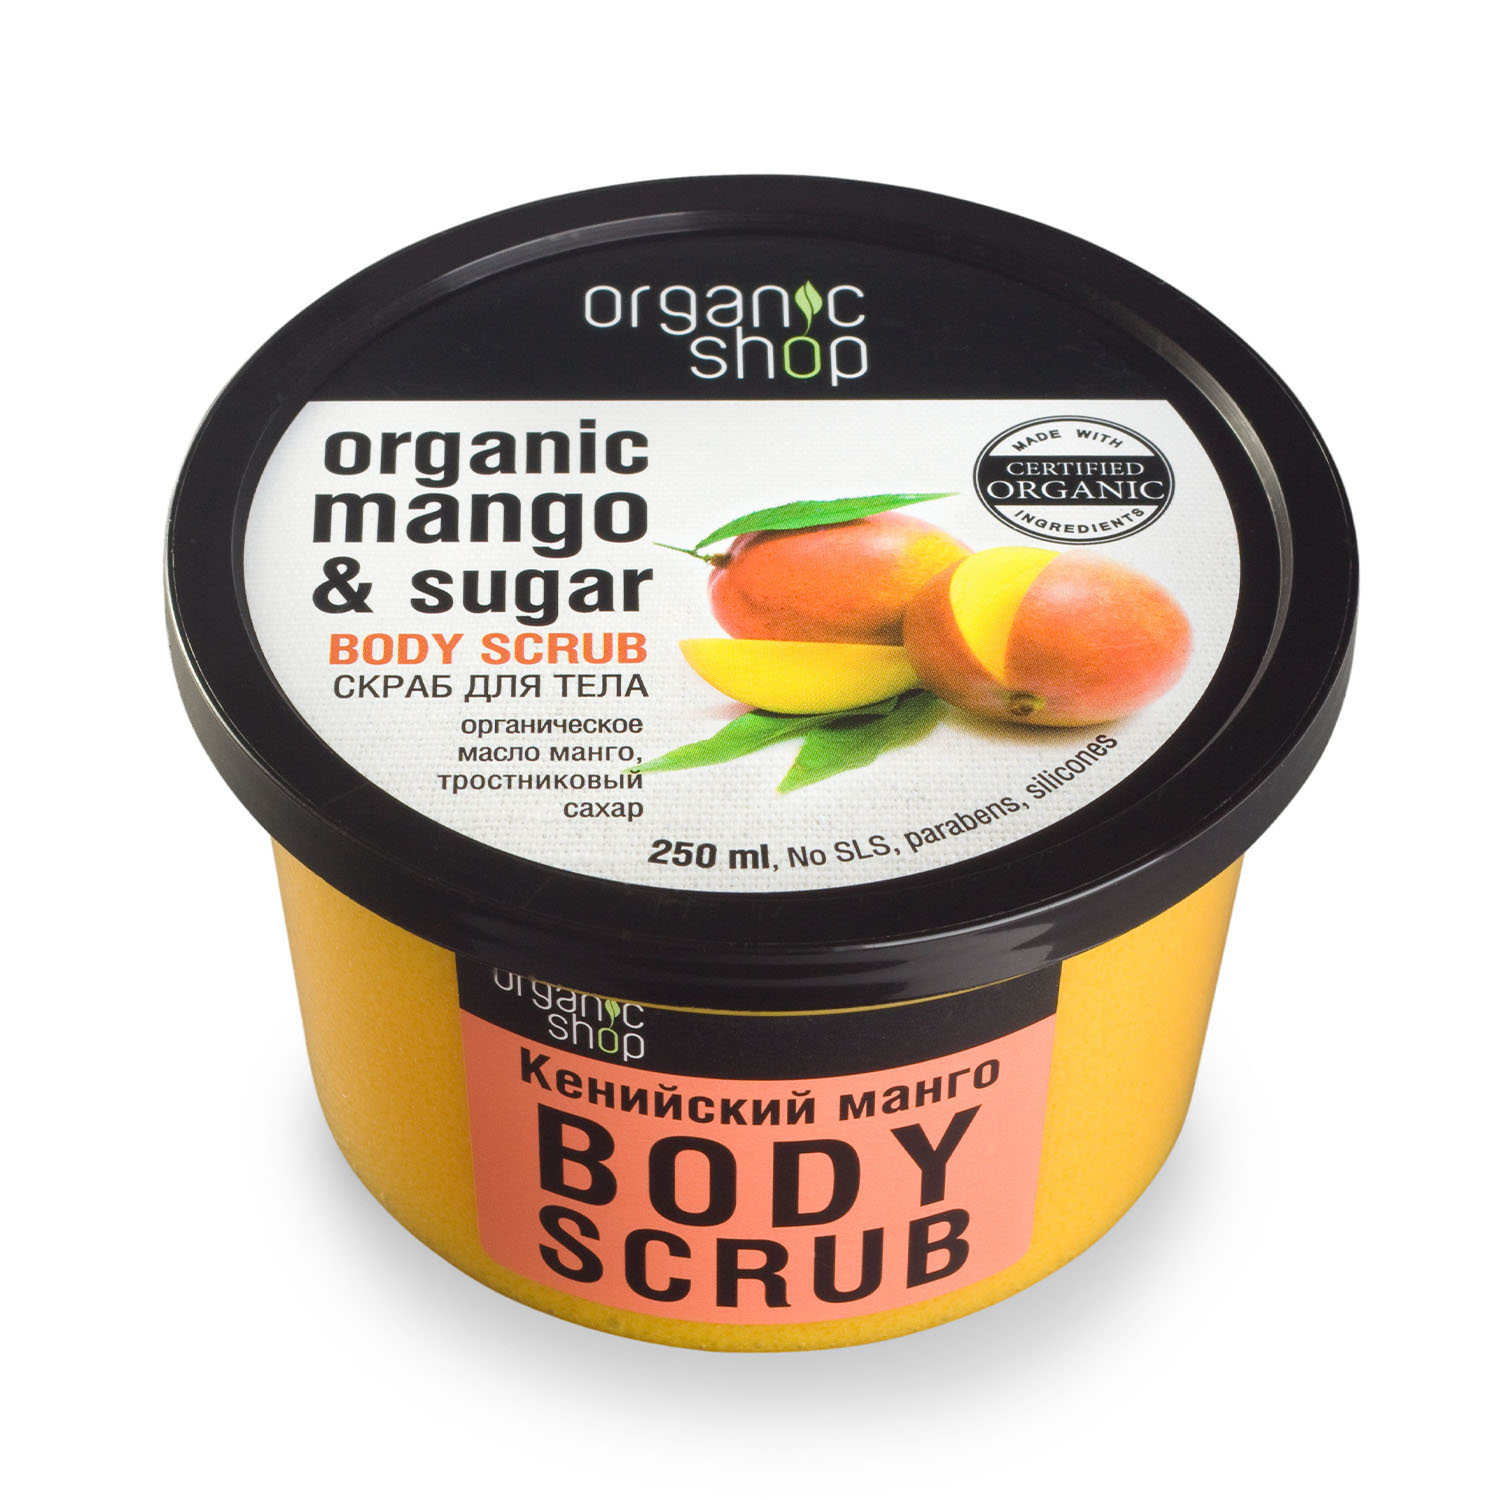 Organic Shop Скраб для тела Кенийский манго, 250 мл (Organ